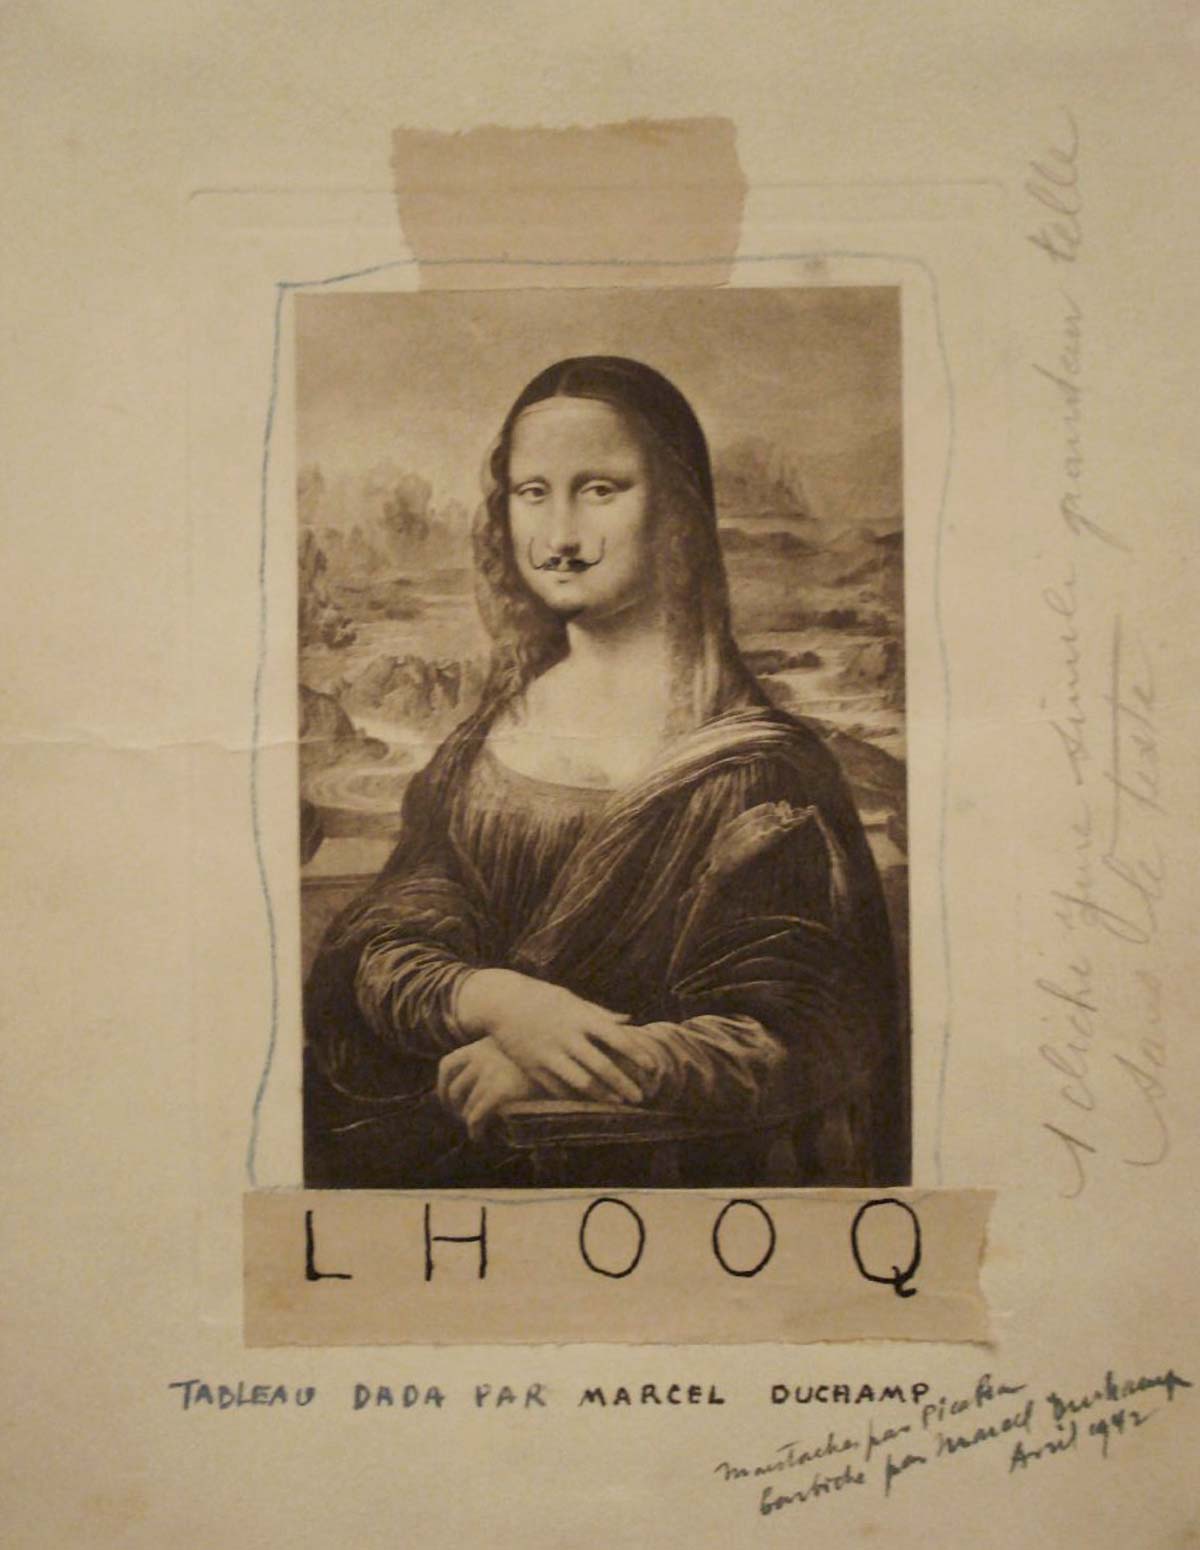 Marcel_Duchamp,_1919,_L.H.O.O.Q_resize.jpg